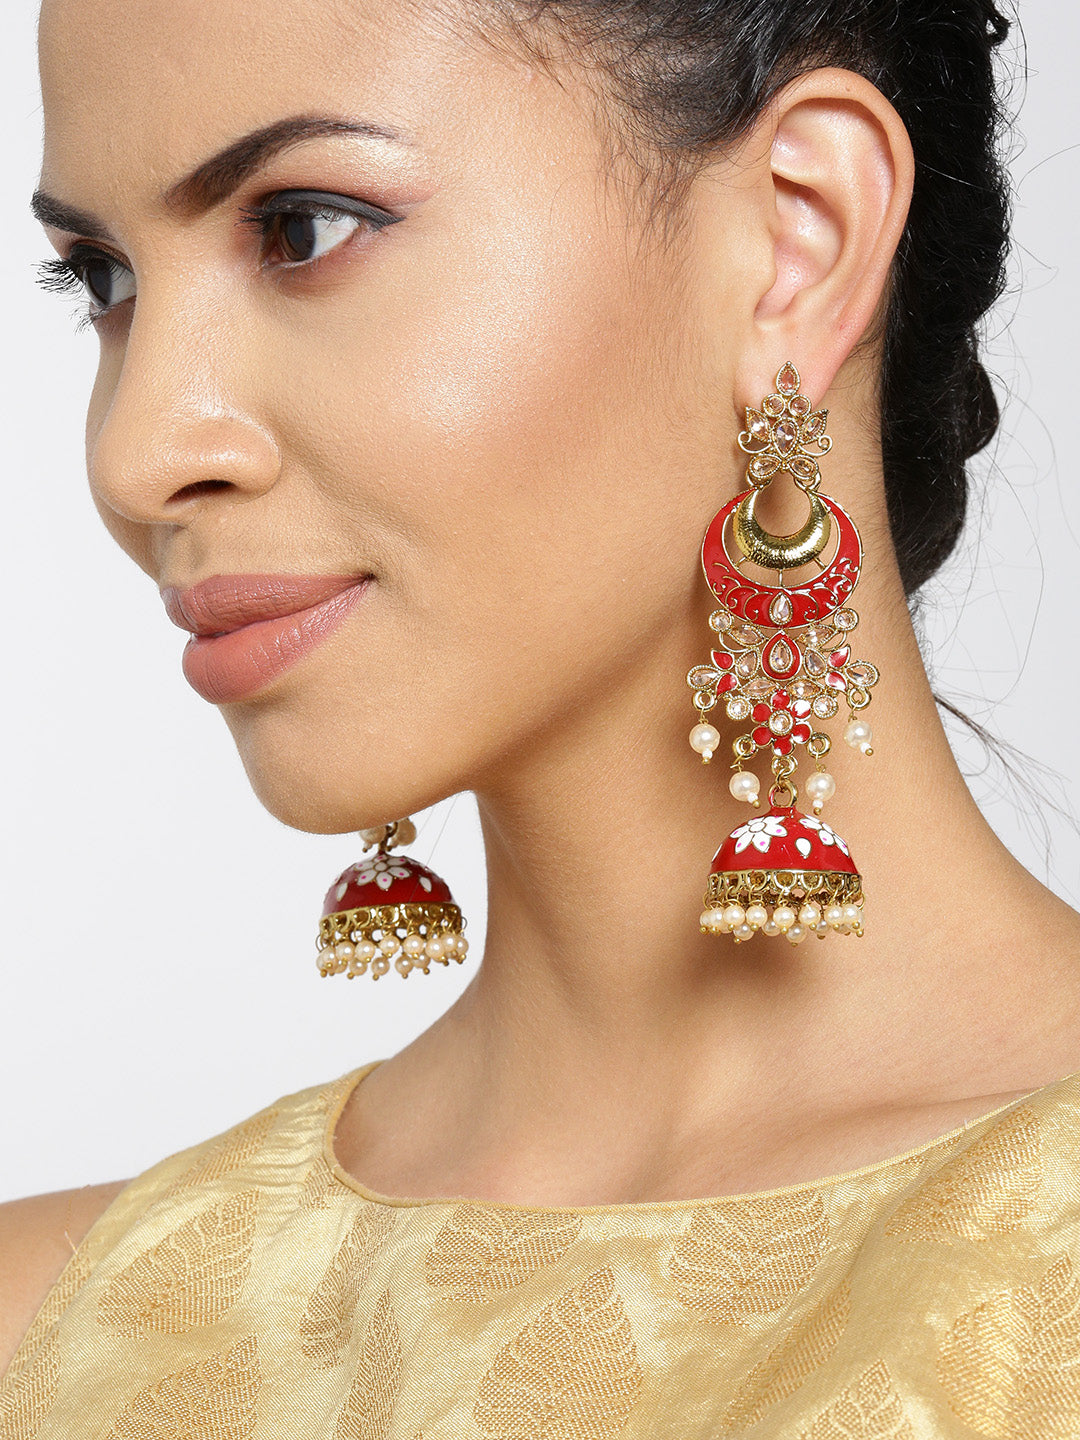 Rajbai imitation Traditional Ethnic Big size colourful Jhumka / Jhumki  Earrings/chain earrings for girls and women.